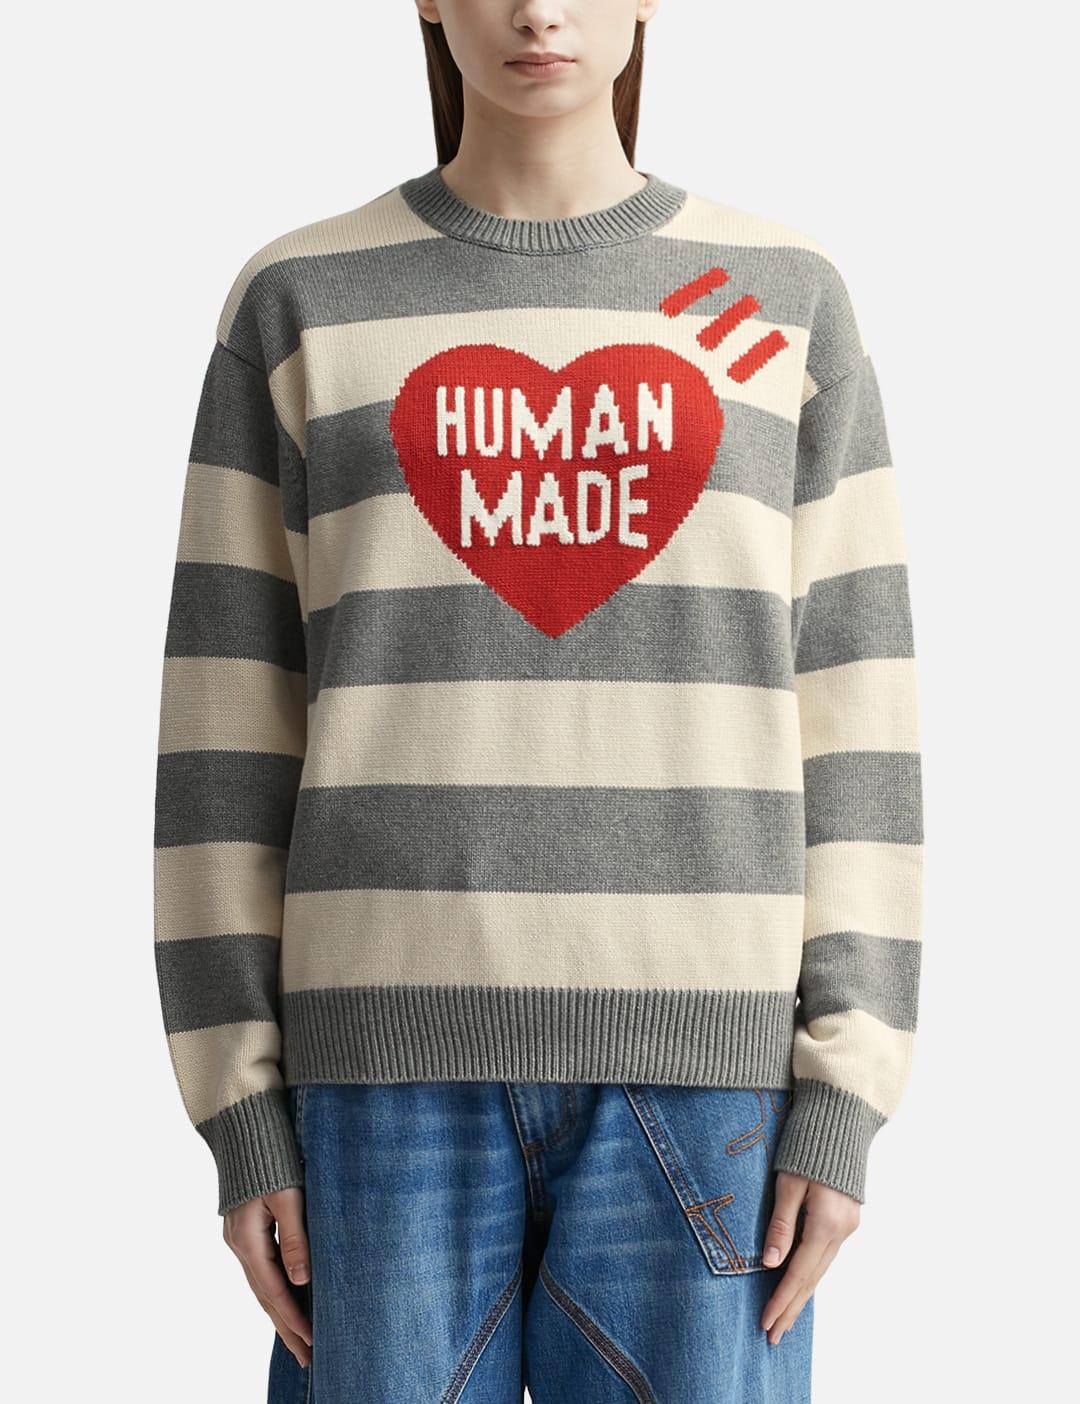 Human Made Women's Grey Striped Heart Knit Sweater